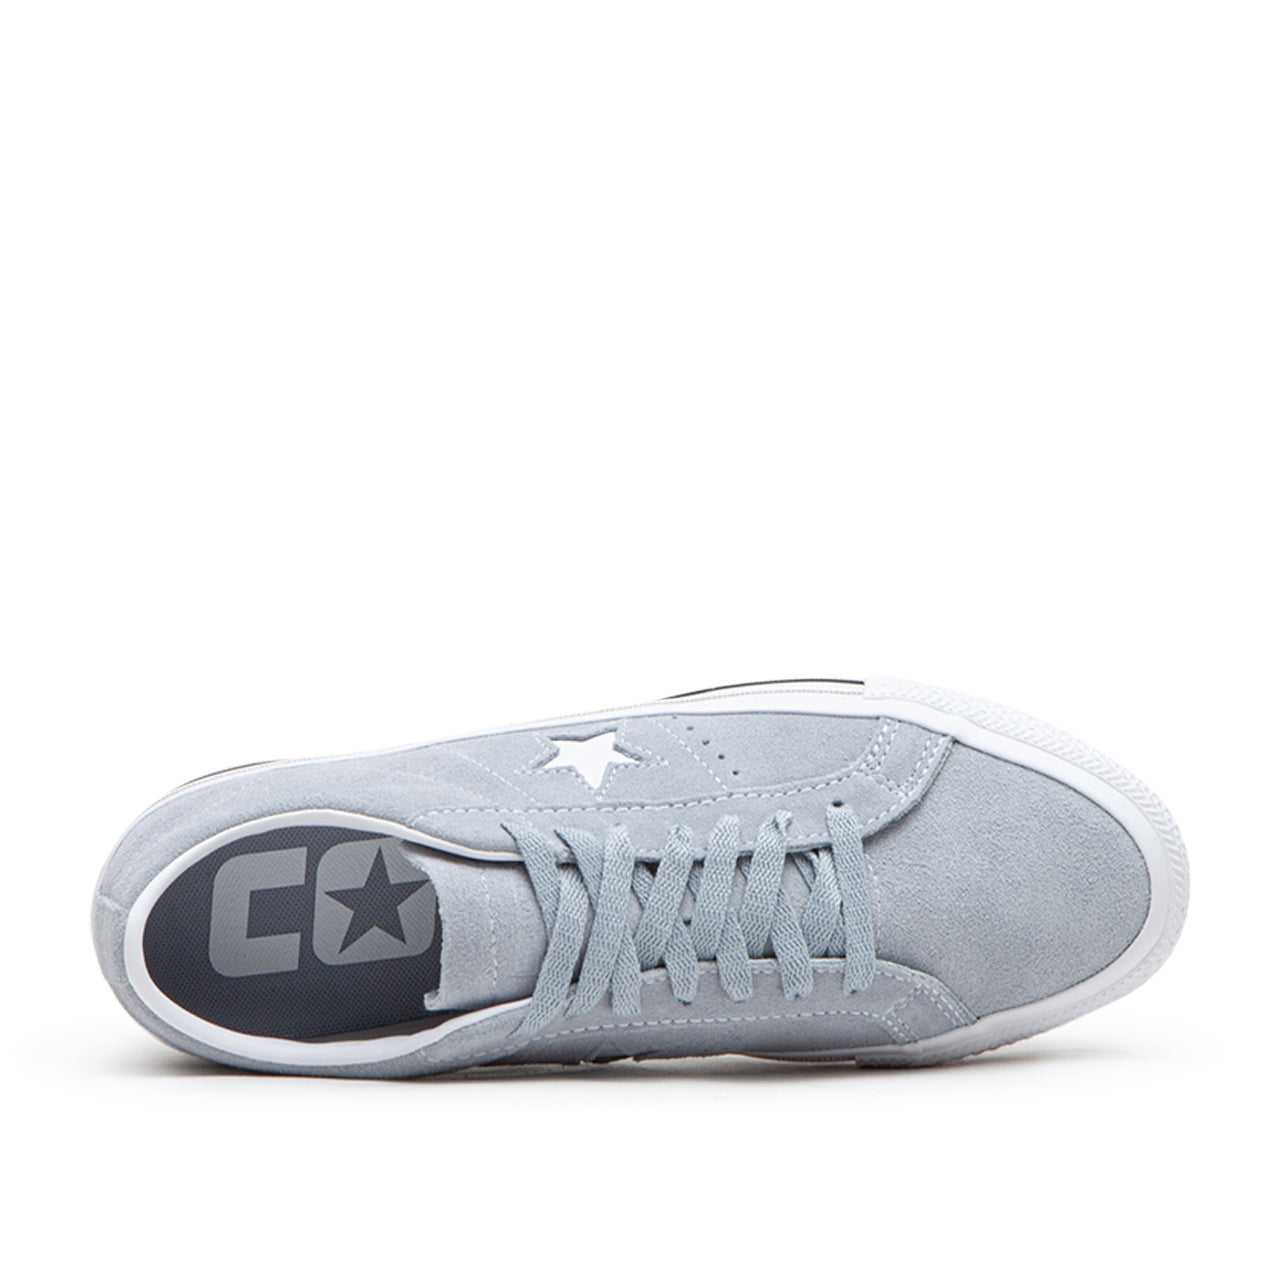 Converse Cons One Star Pro Fall Tone (Grau / Weiß)  - Cheap Sneakersbe Jordan Outlet